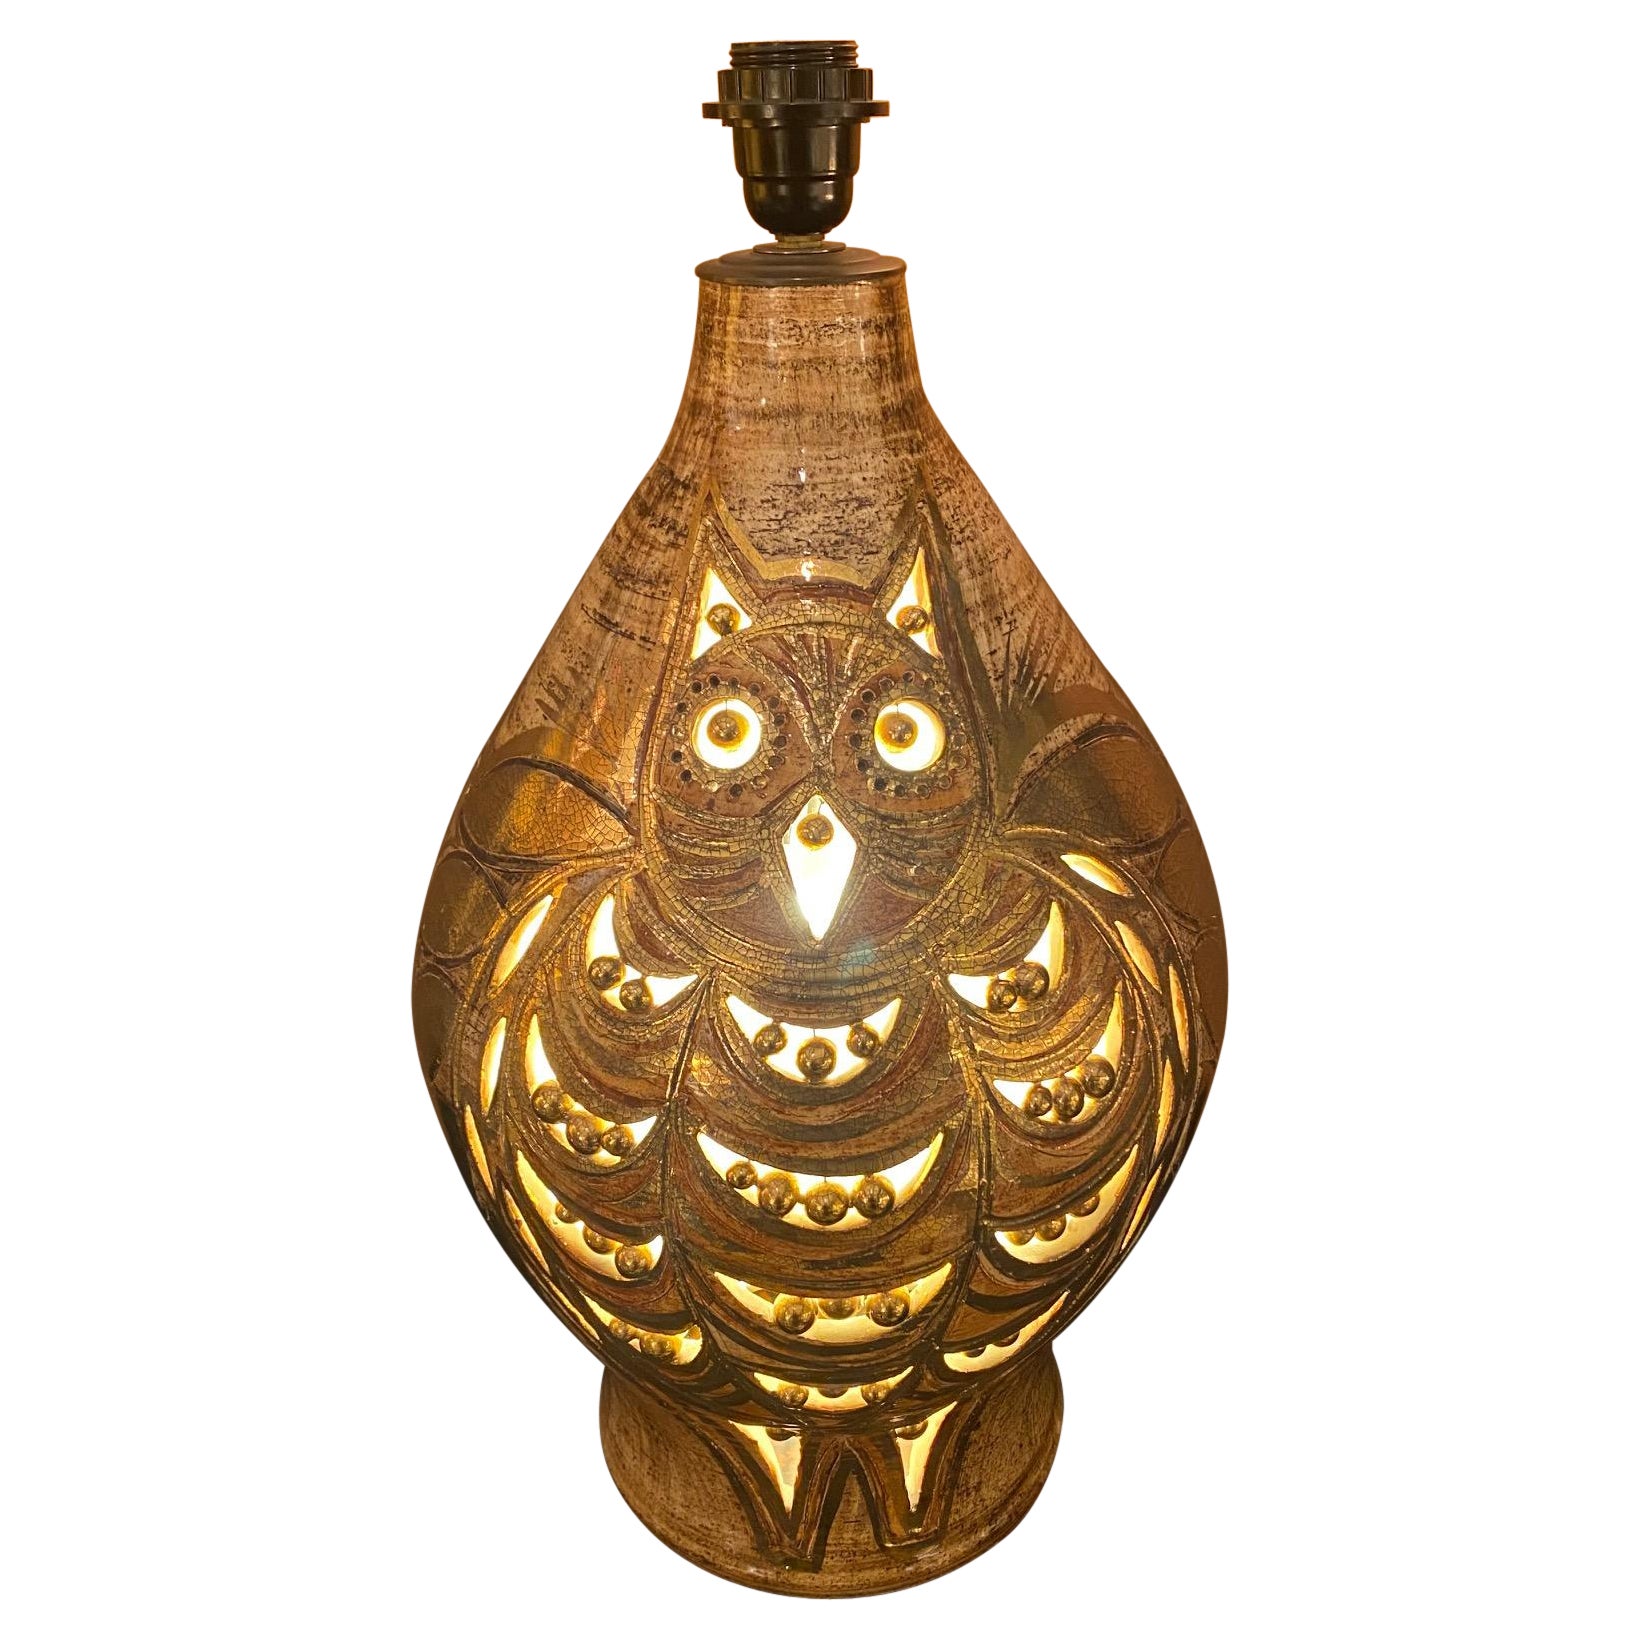 Ceramic Lamp "Owl" by Georges Pelletier, France, 1960s